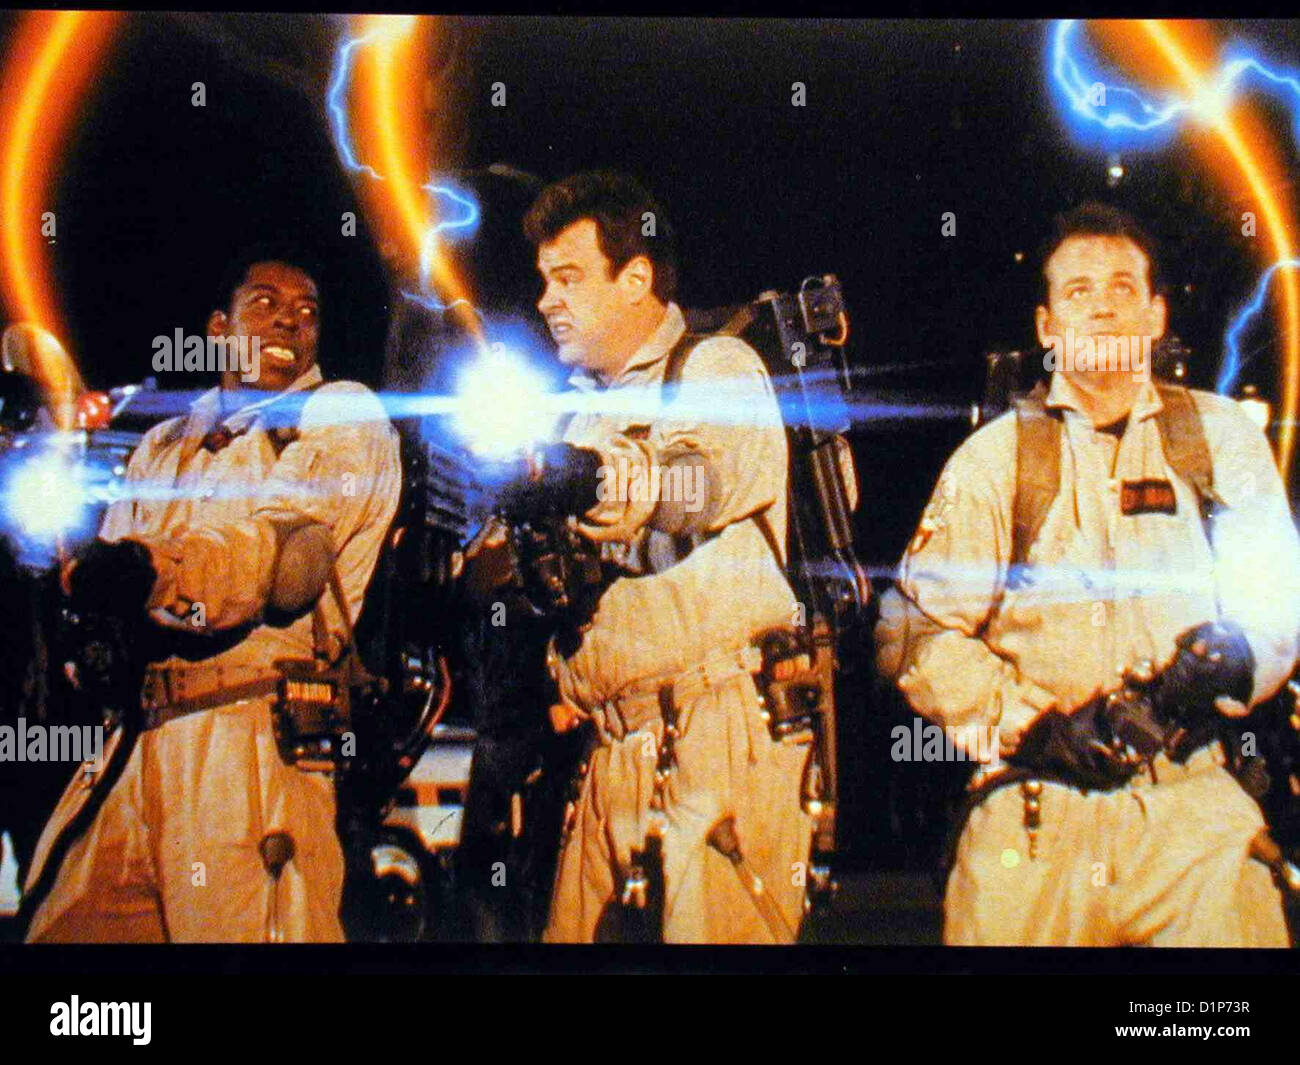 Ghostbusters 2   Ghostbusters Ii.   Ernie Hudson, Dan Aykroyd, Bill Murray *** Local Caption *** 1989  -- Stock Photo